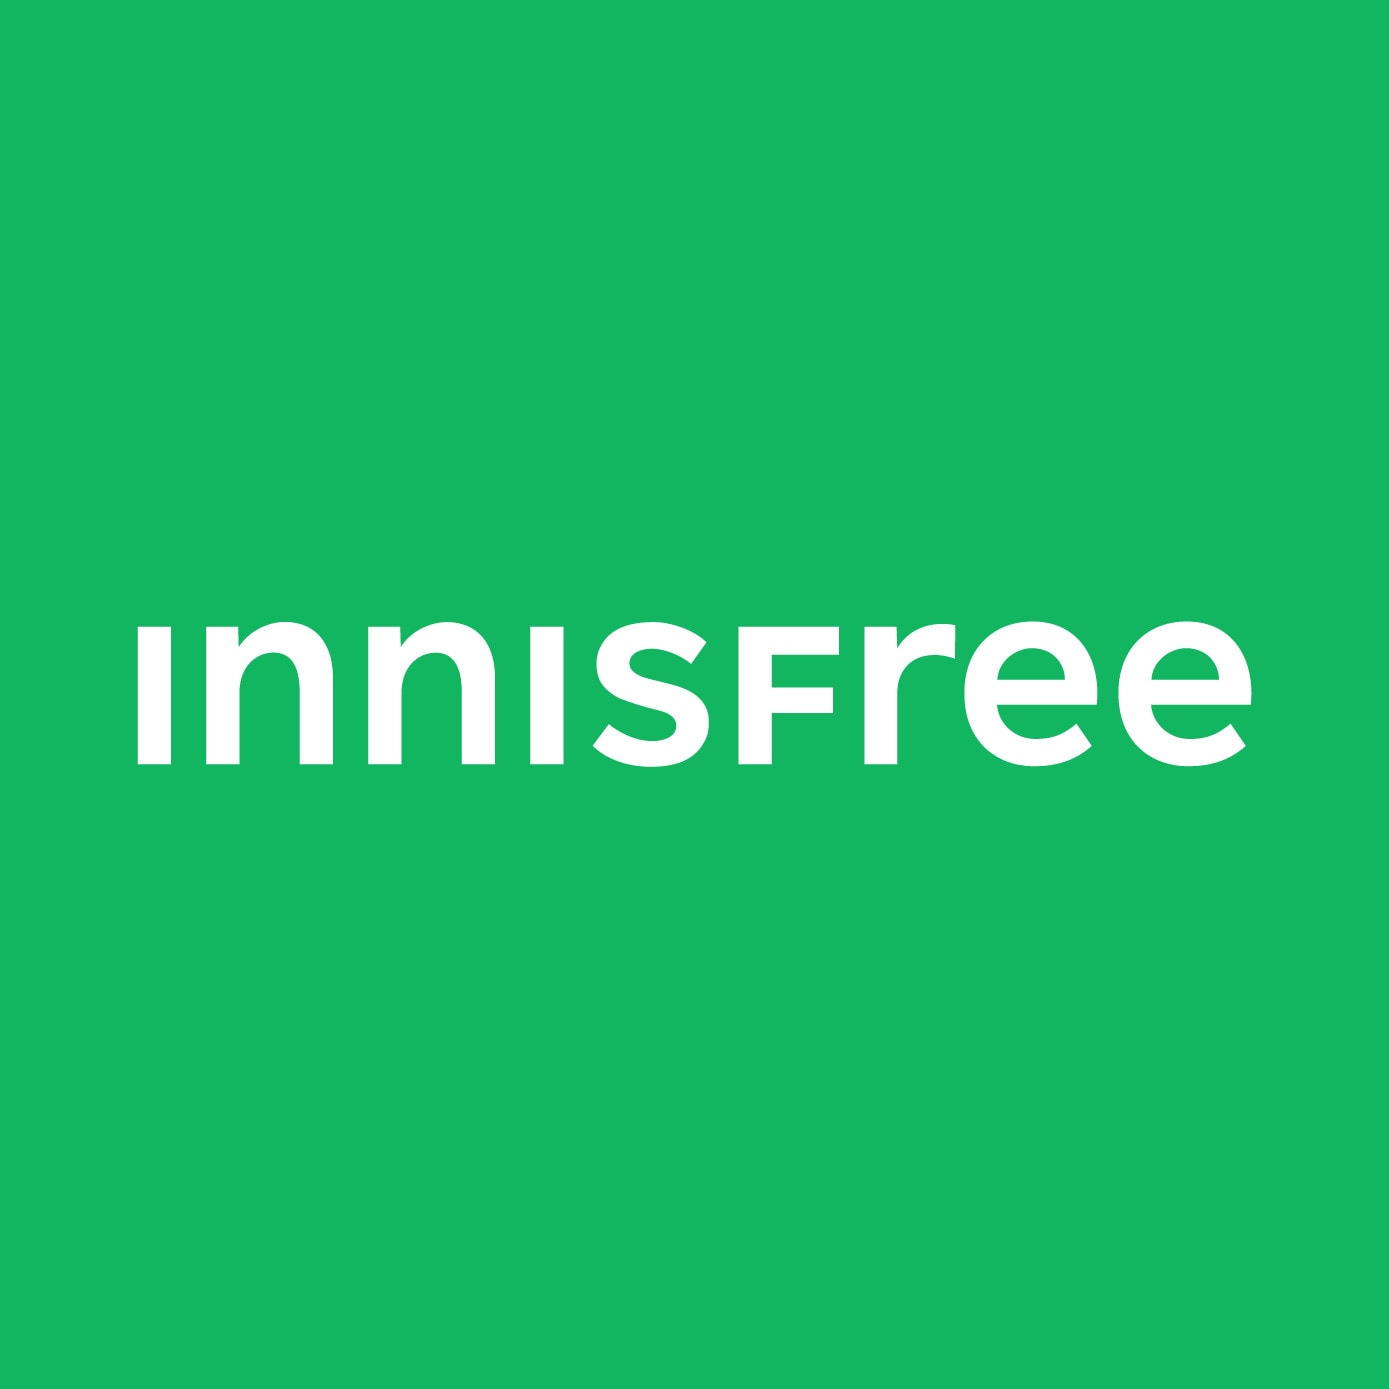 INNISFREE Rebranding New Logo